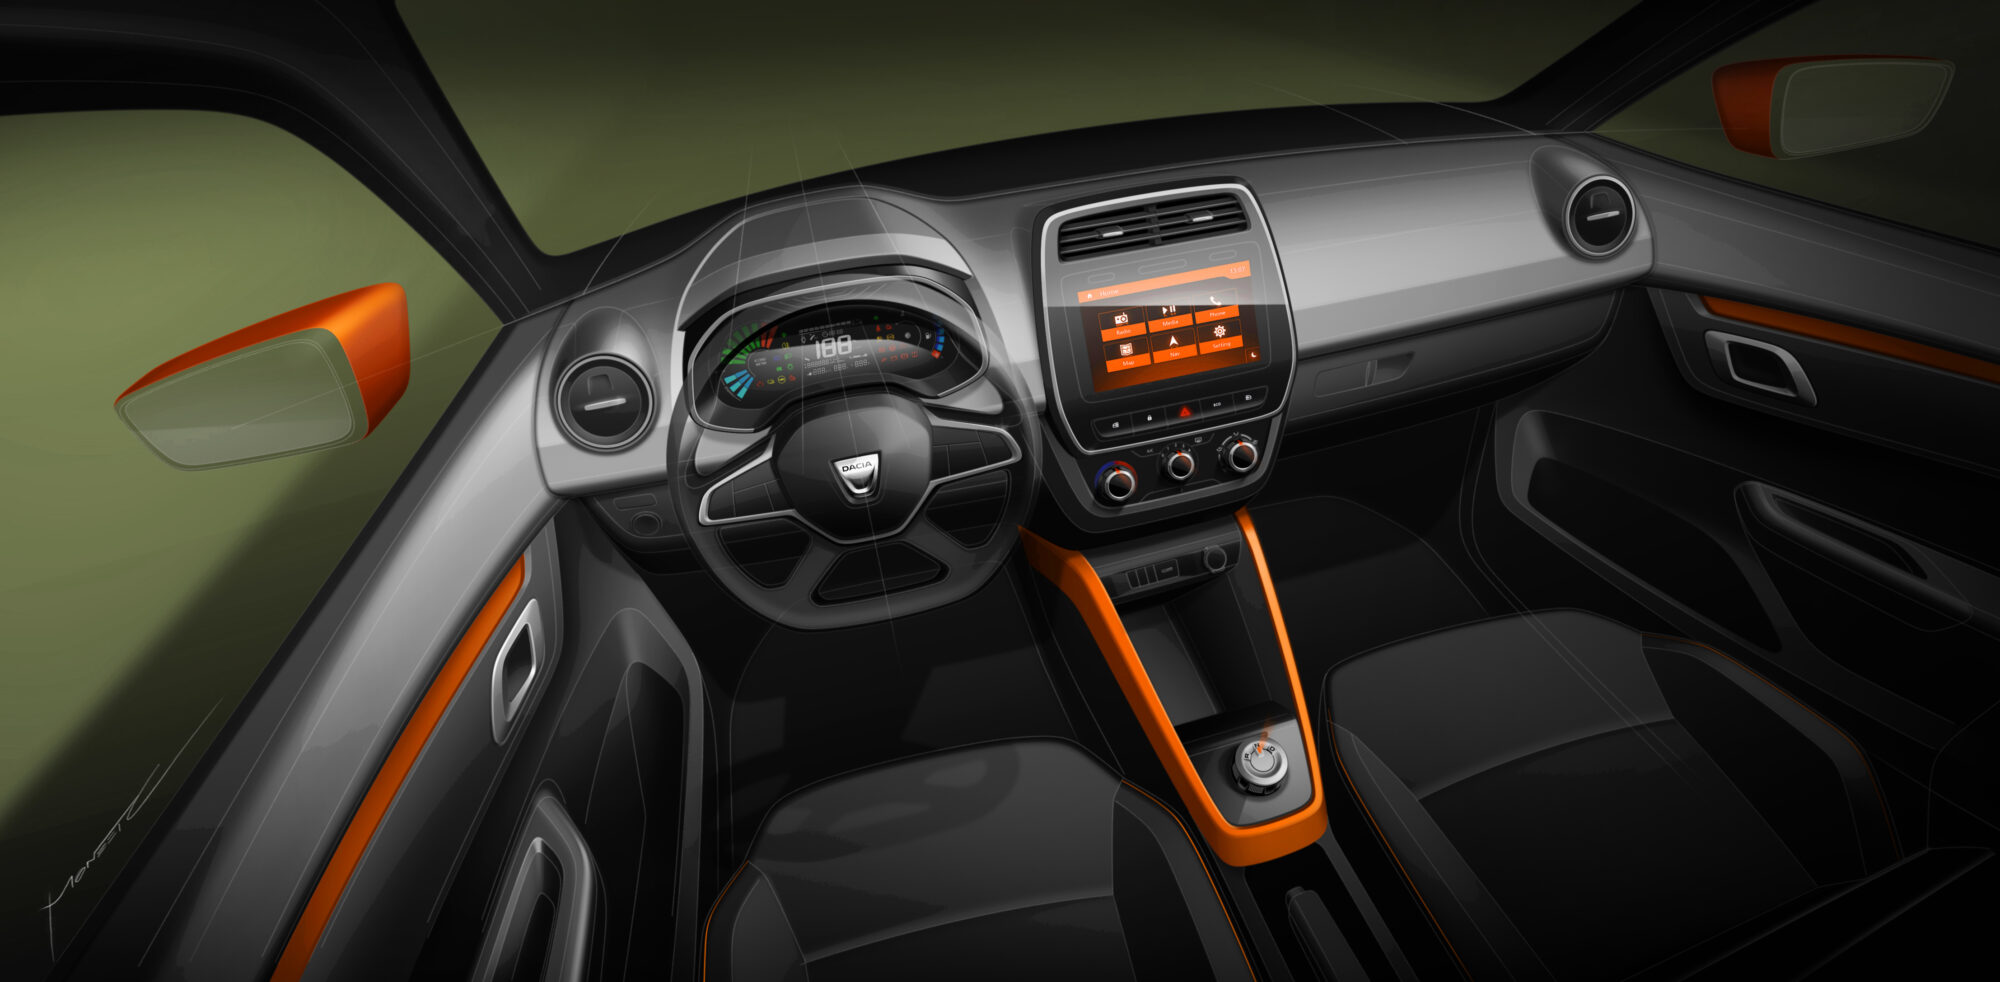 2020 - Dacia SPRING - Design genesis